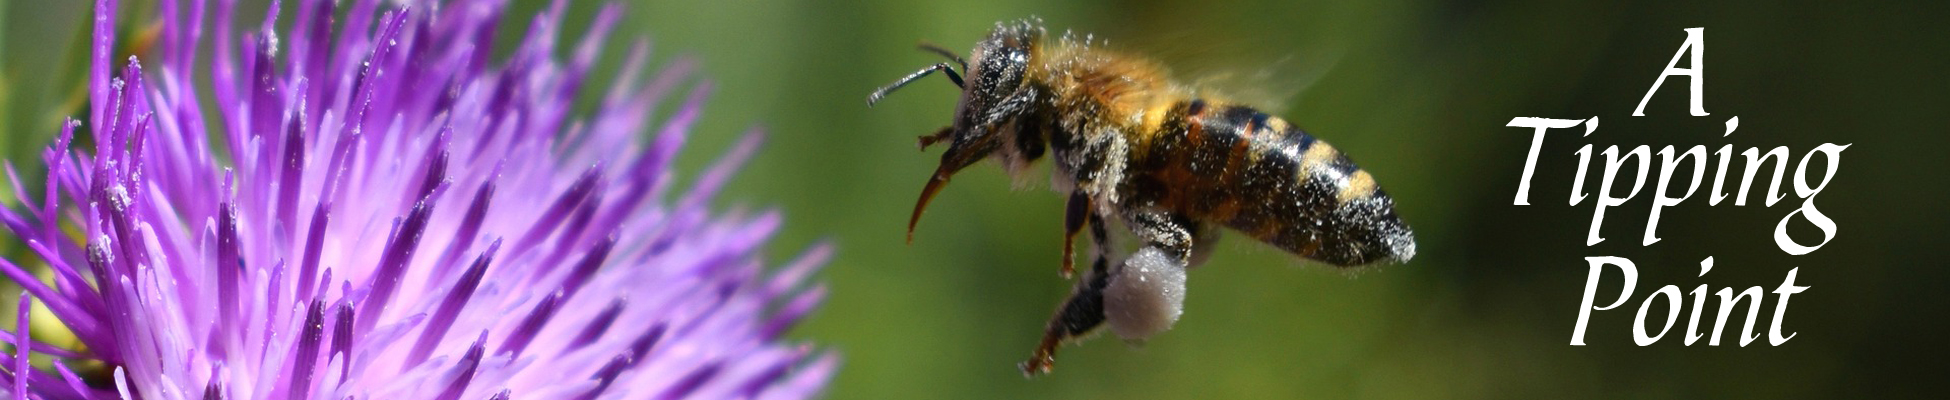 A honey bee flying near a flower